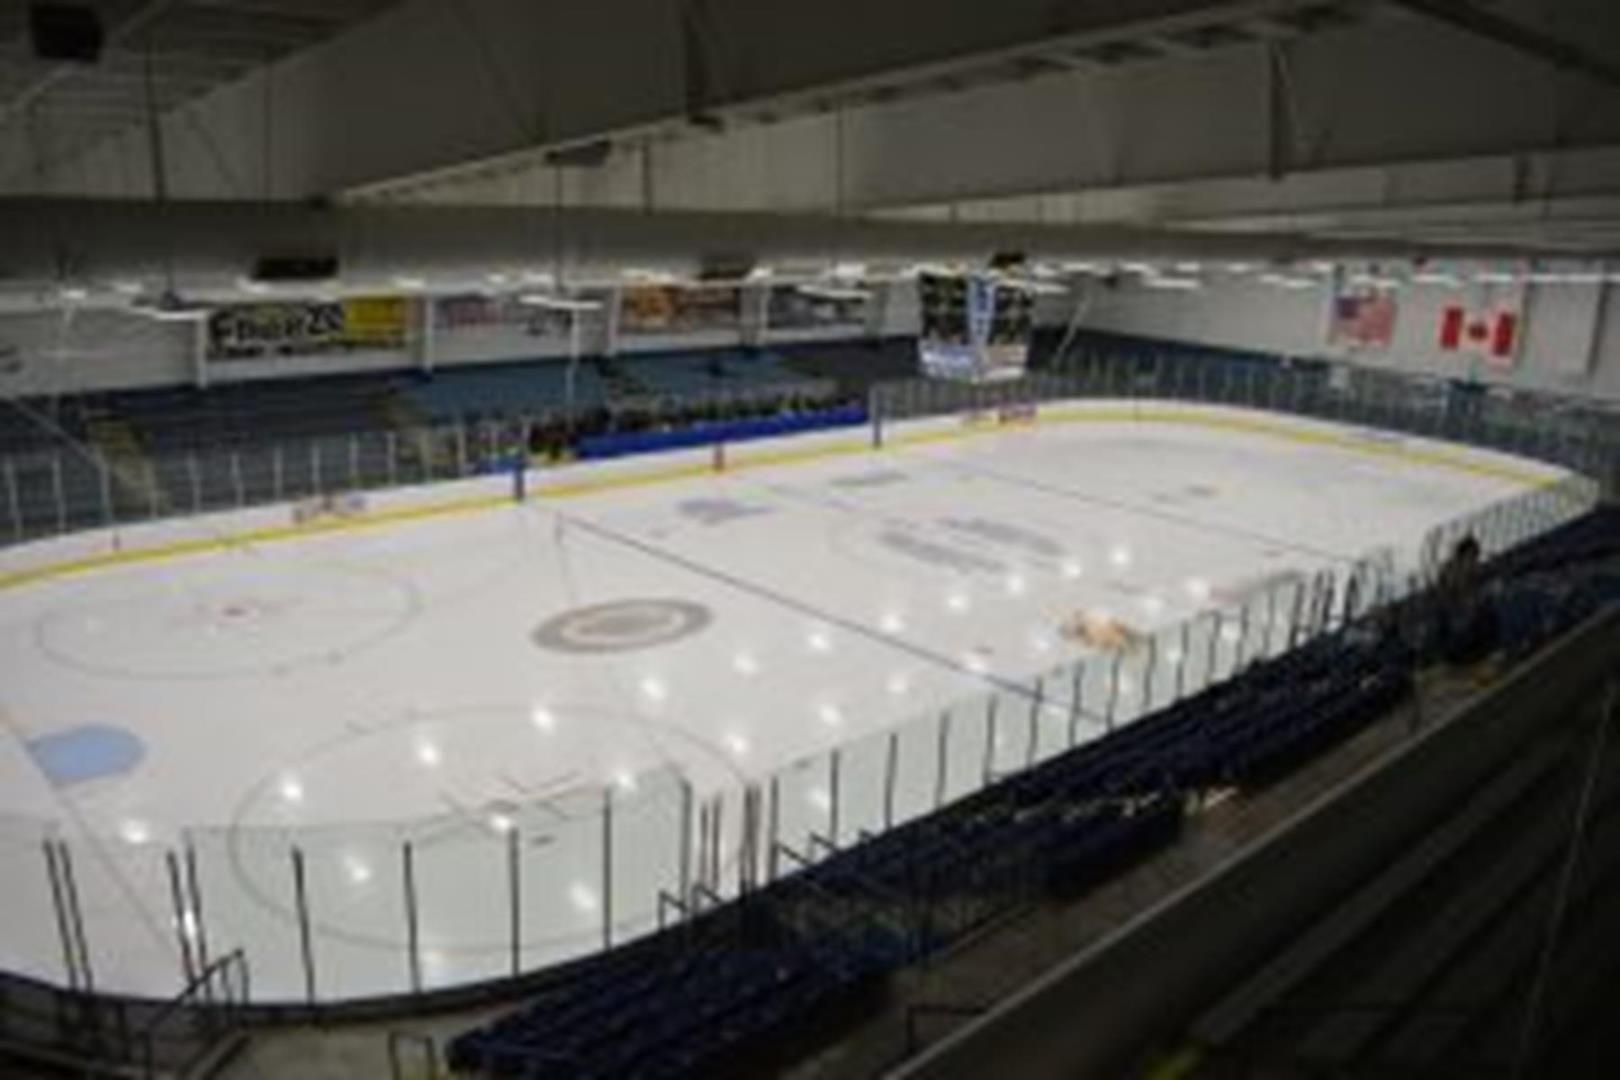 Fox Valley Ice Arena